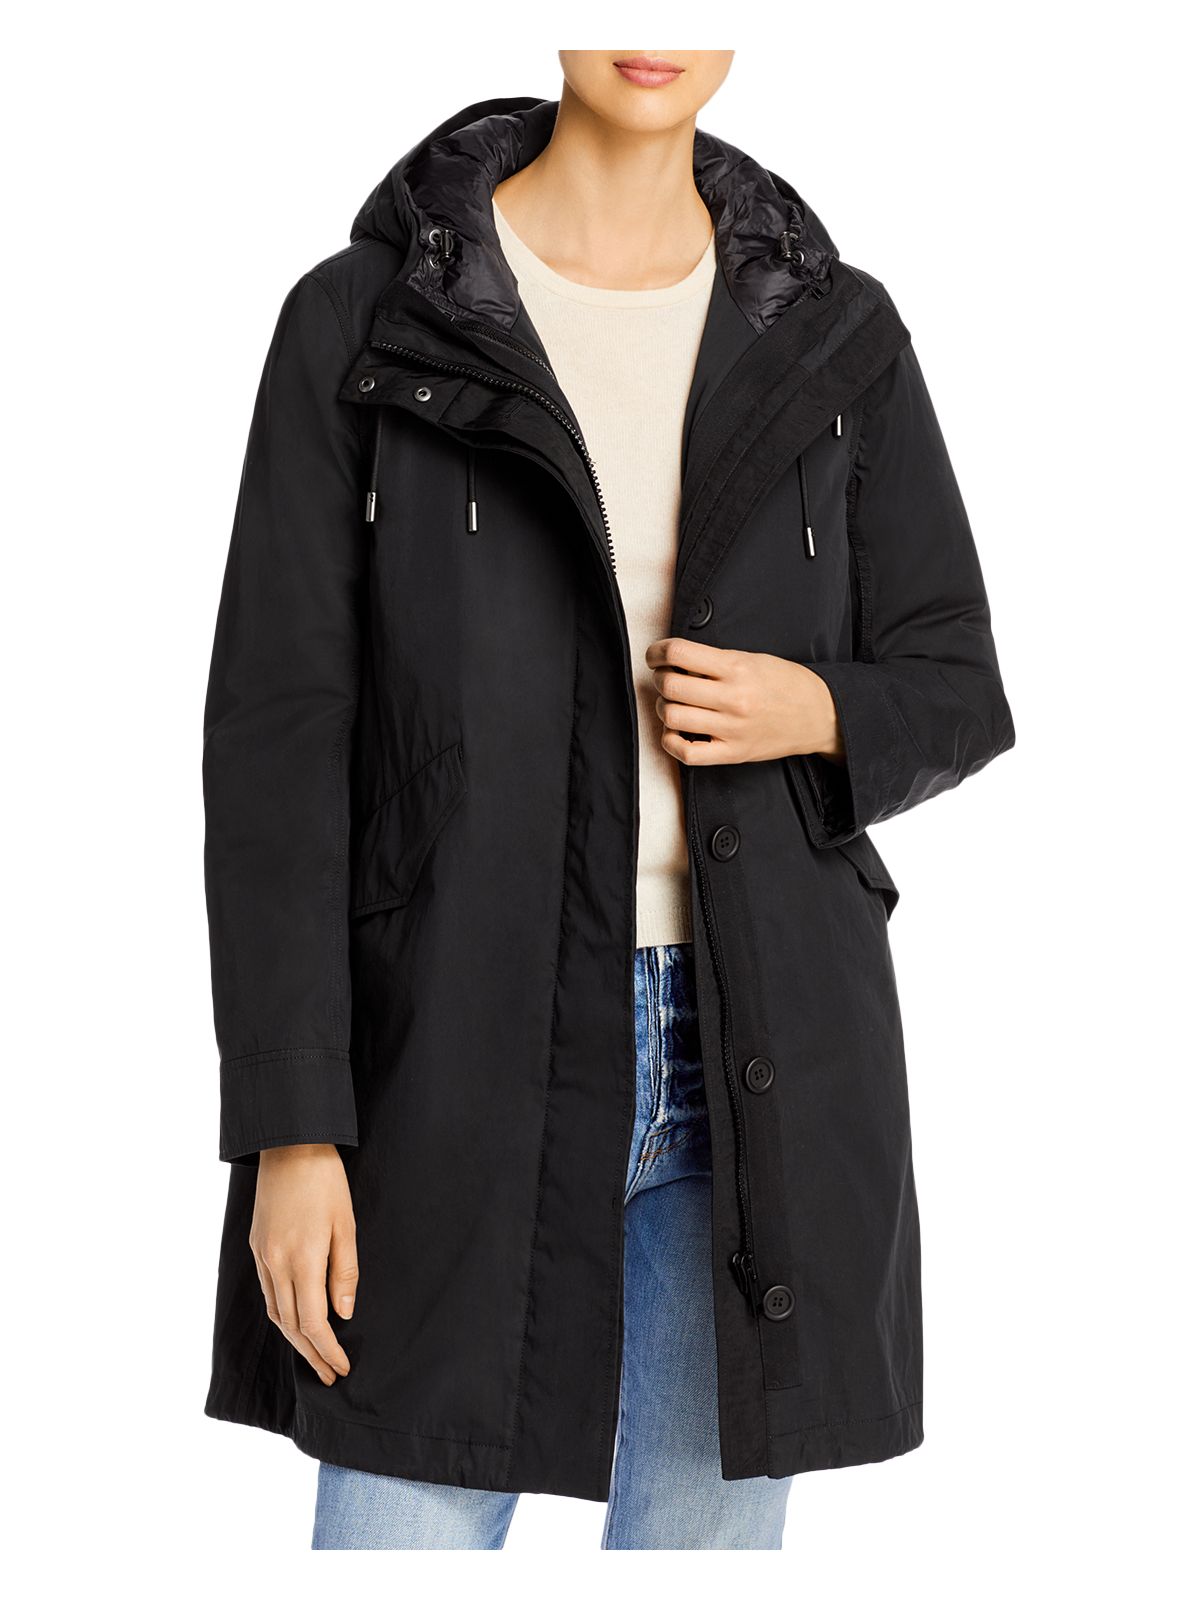 YS ARMY Womens Black Zip Up Winter Jacket Coat 38